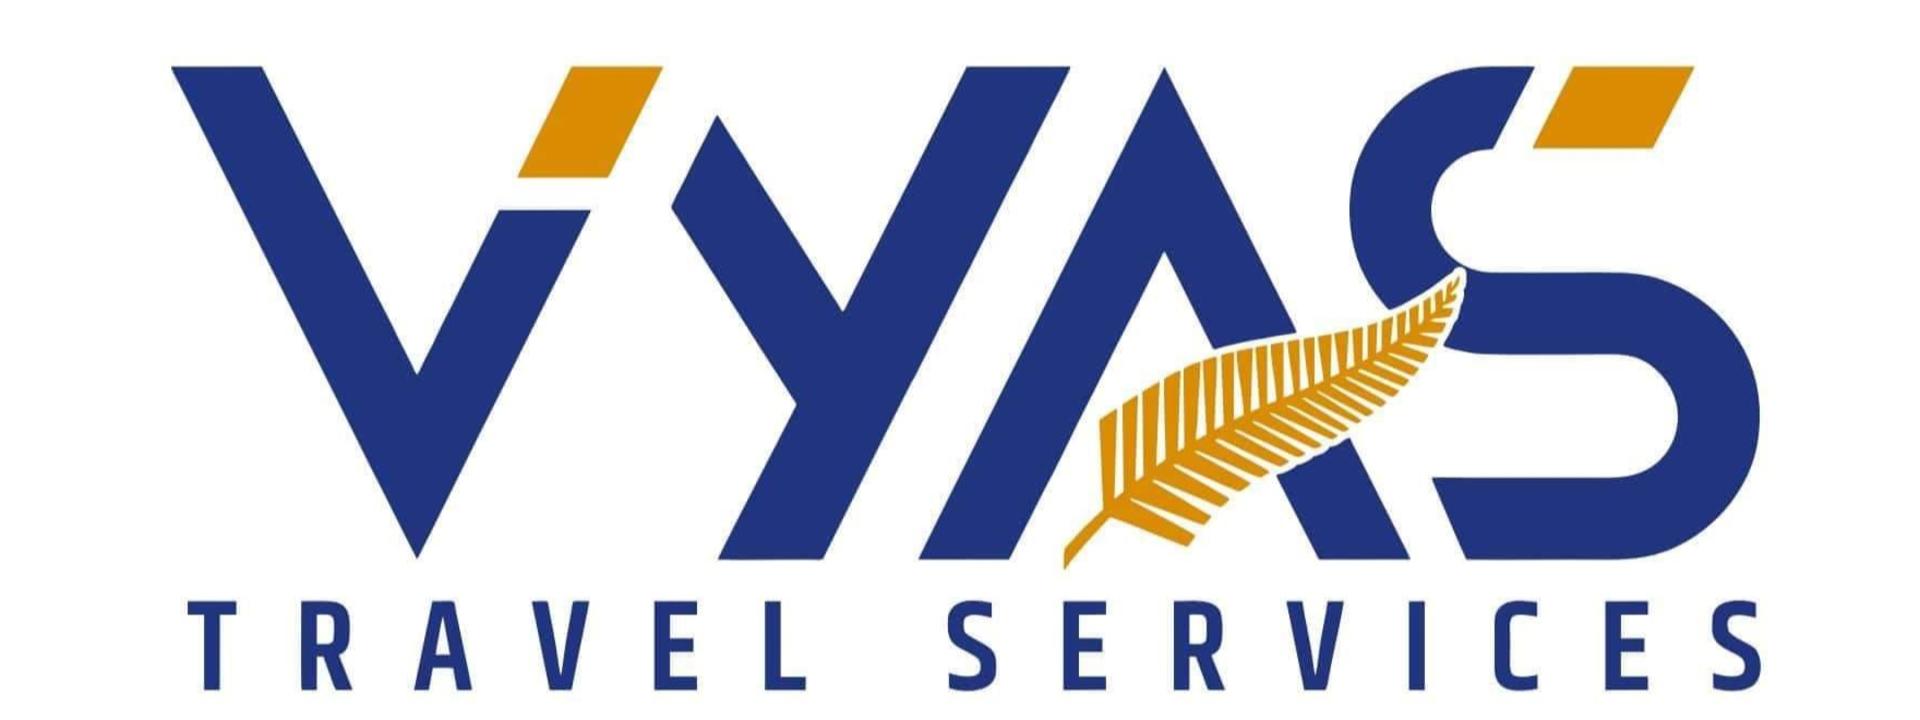 Vyas Travel Services.jpg